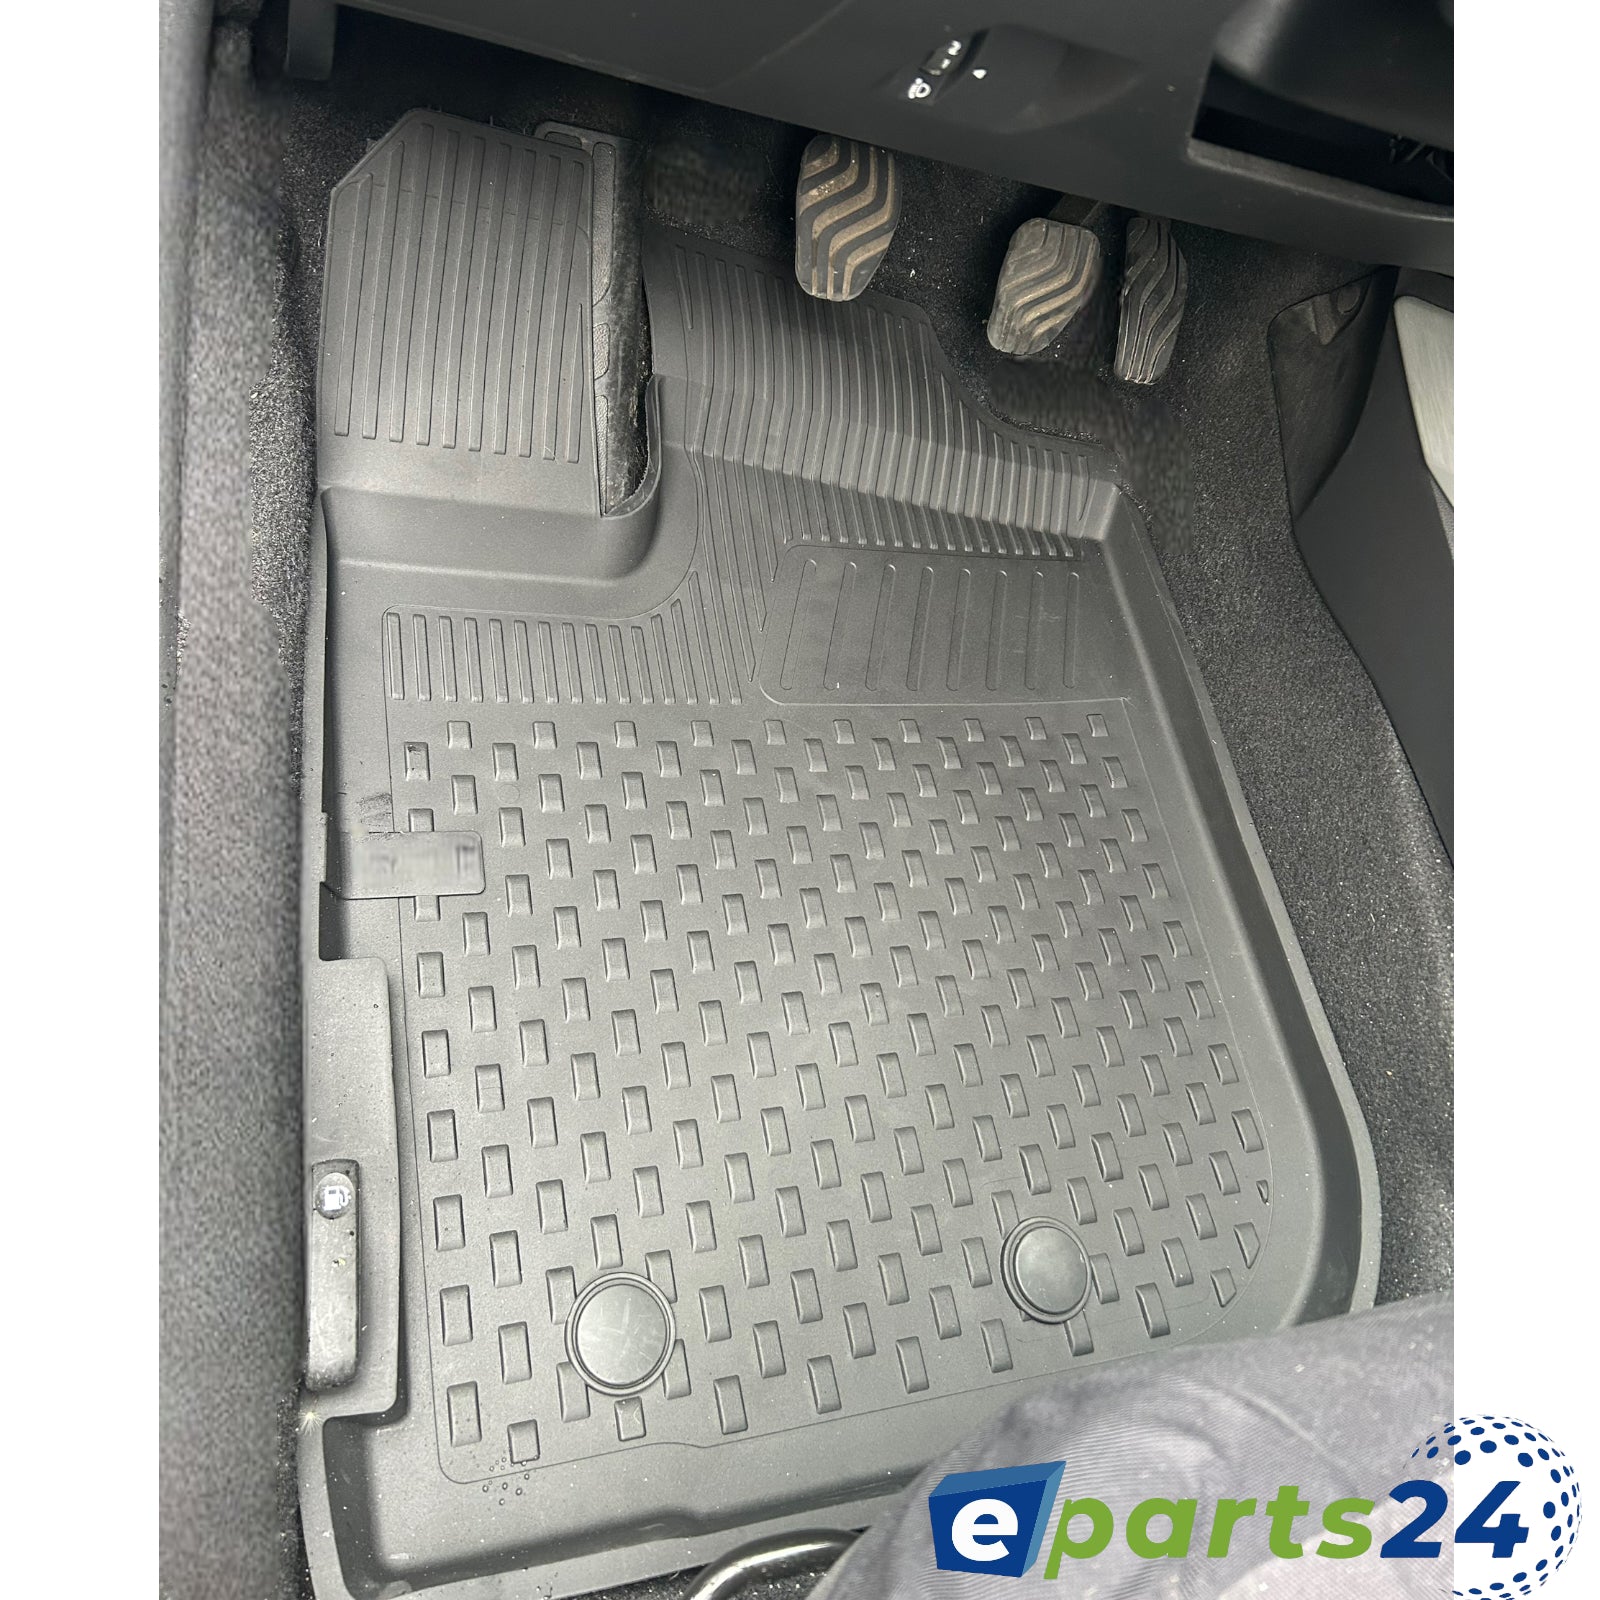 Dacia Duster 2 autofußraummatten - auto bodenmatten - Prime EVA